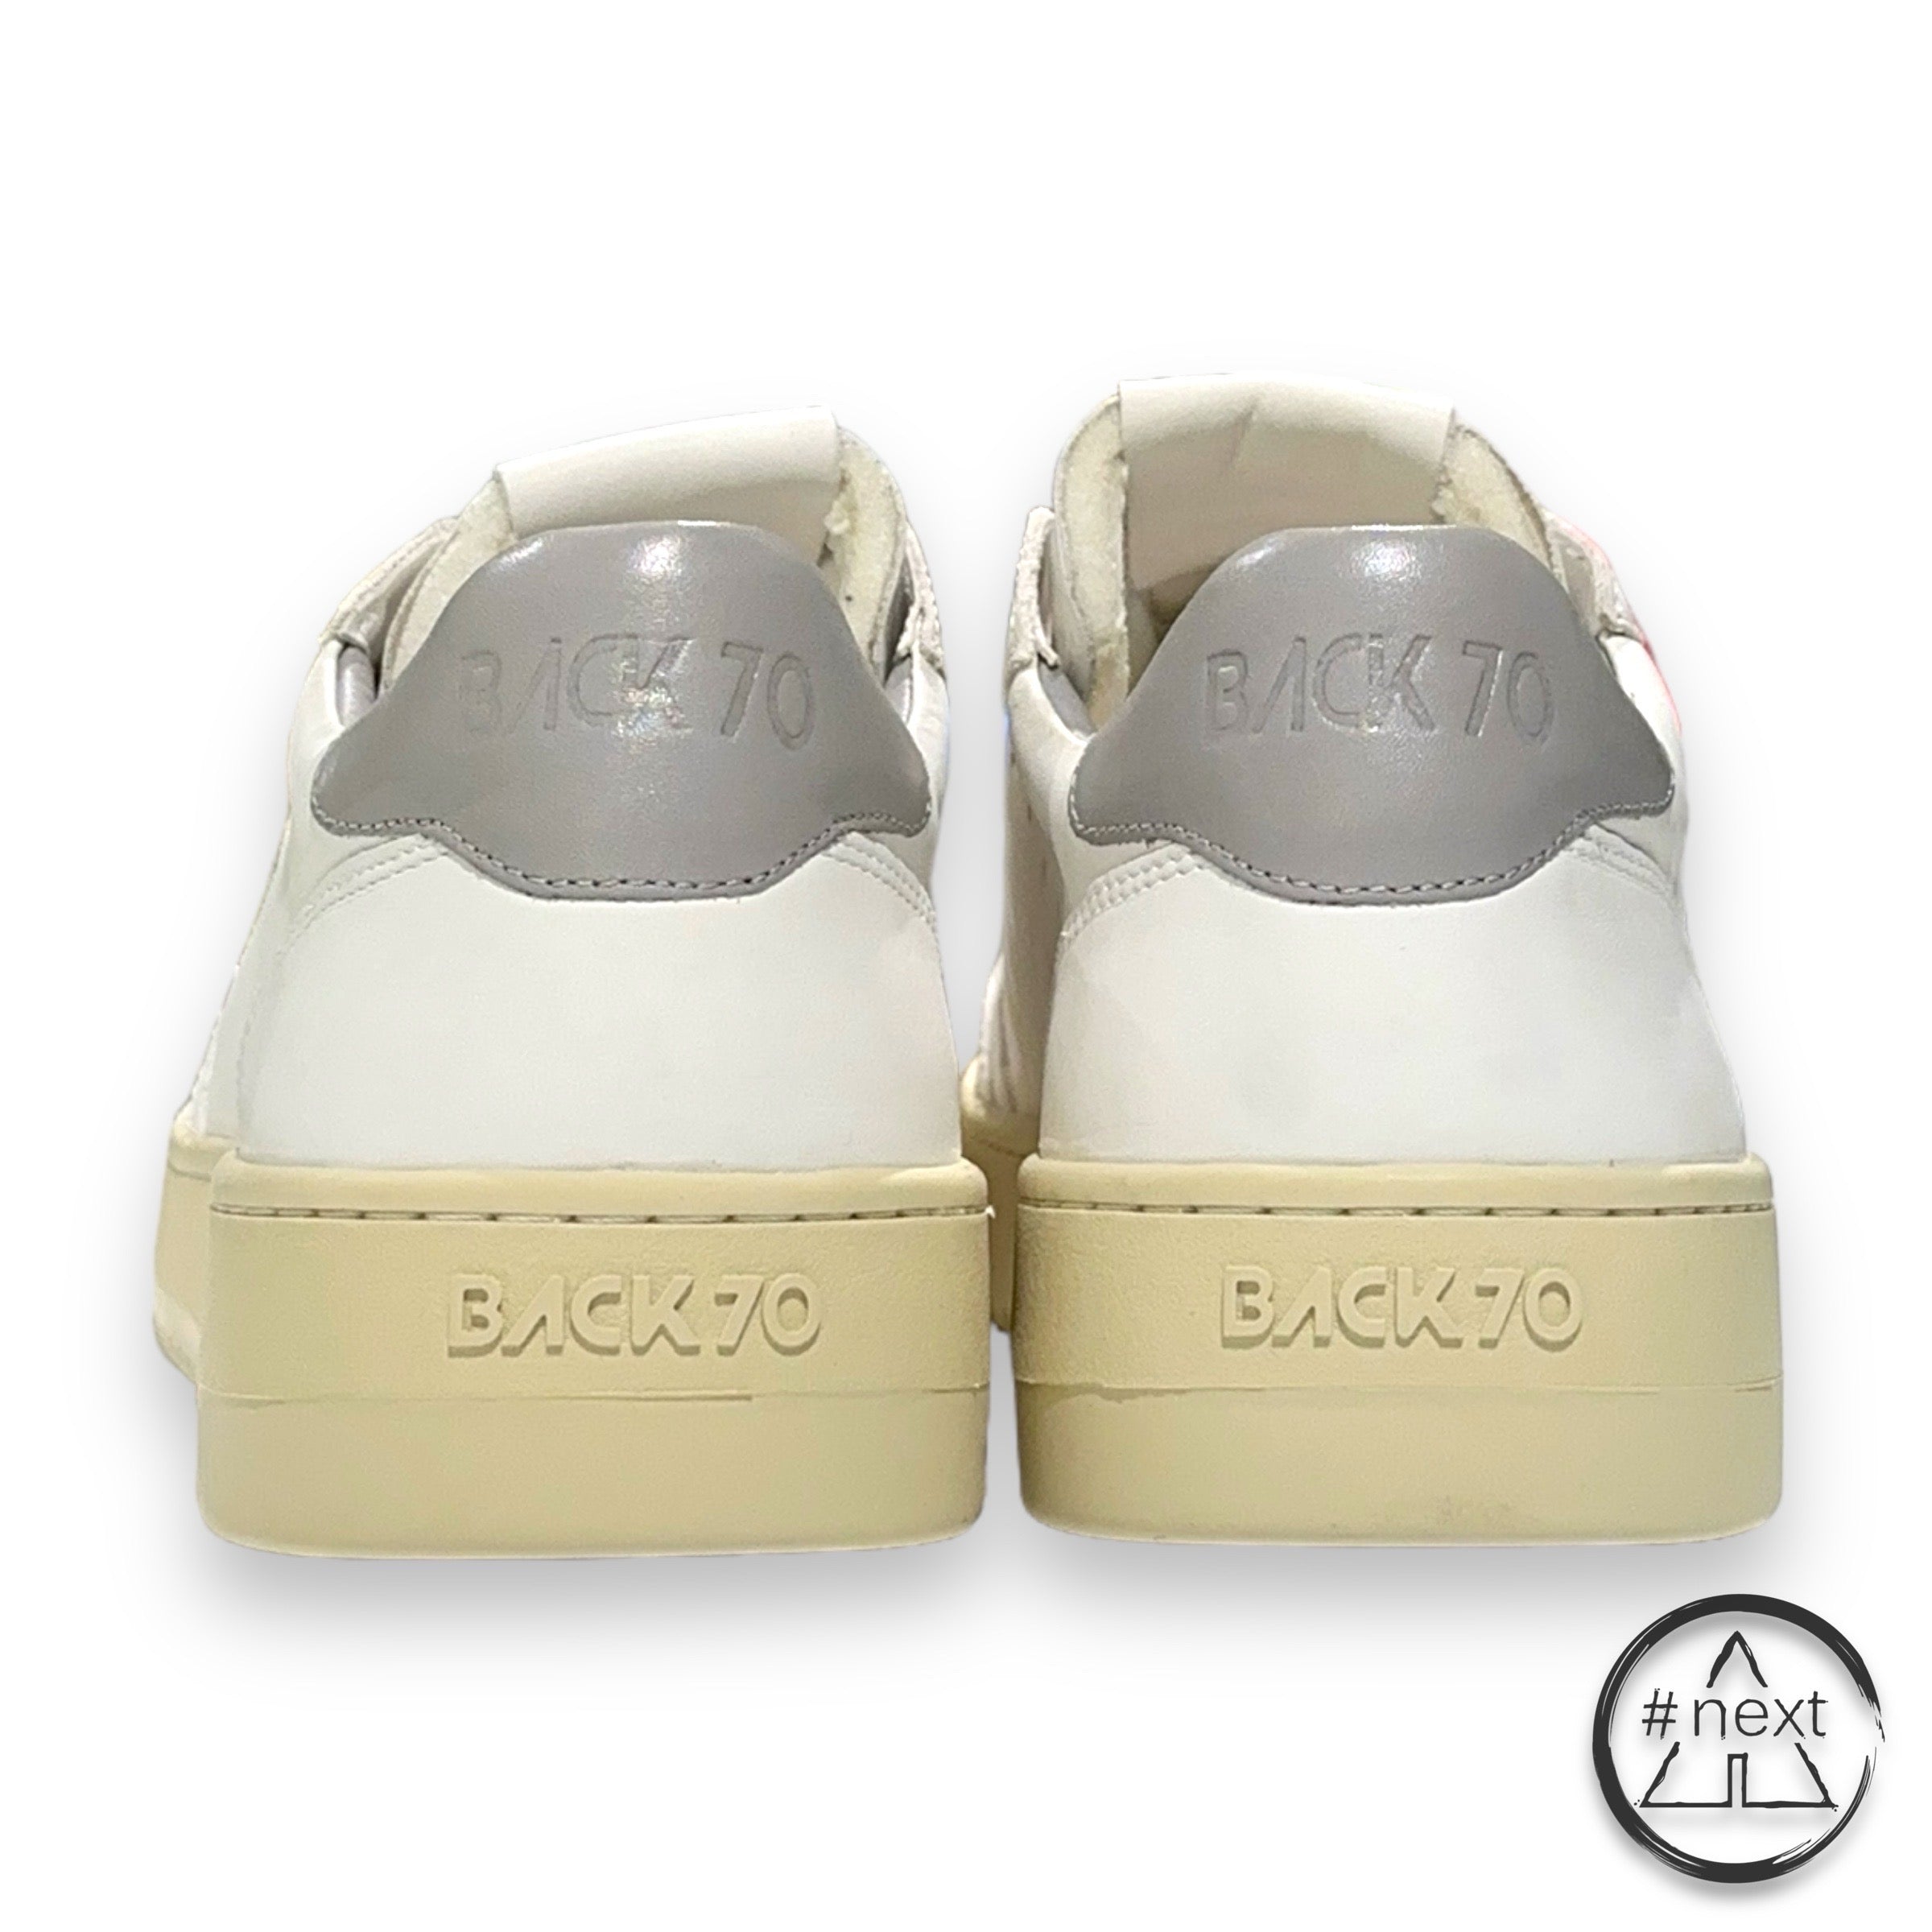 (#E) BACK70 - Sneakers XSLAM - Bianco, grigio. - ANDY #NEXT